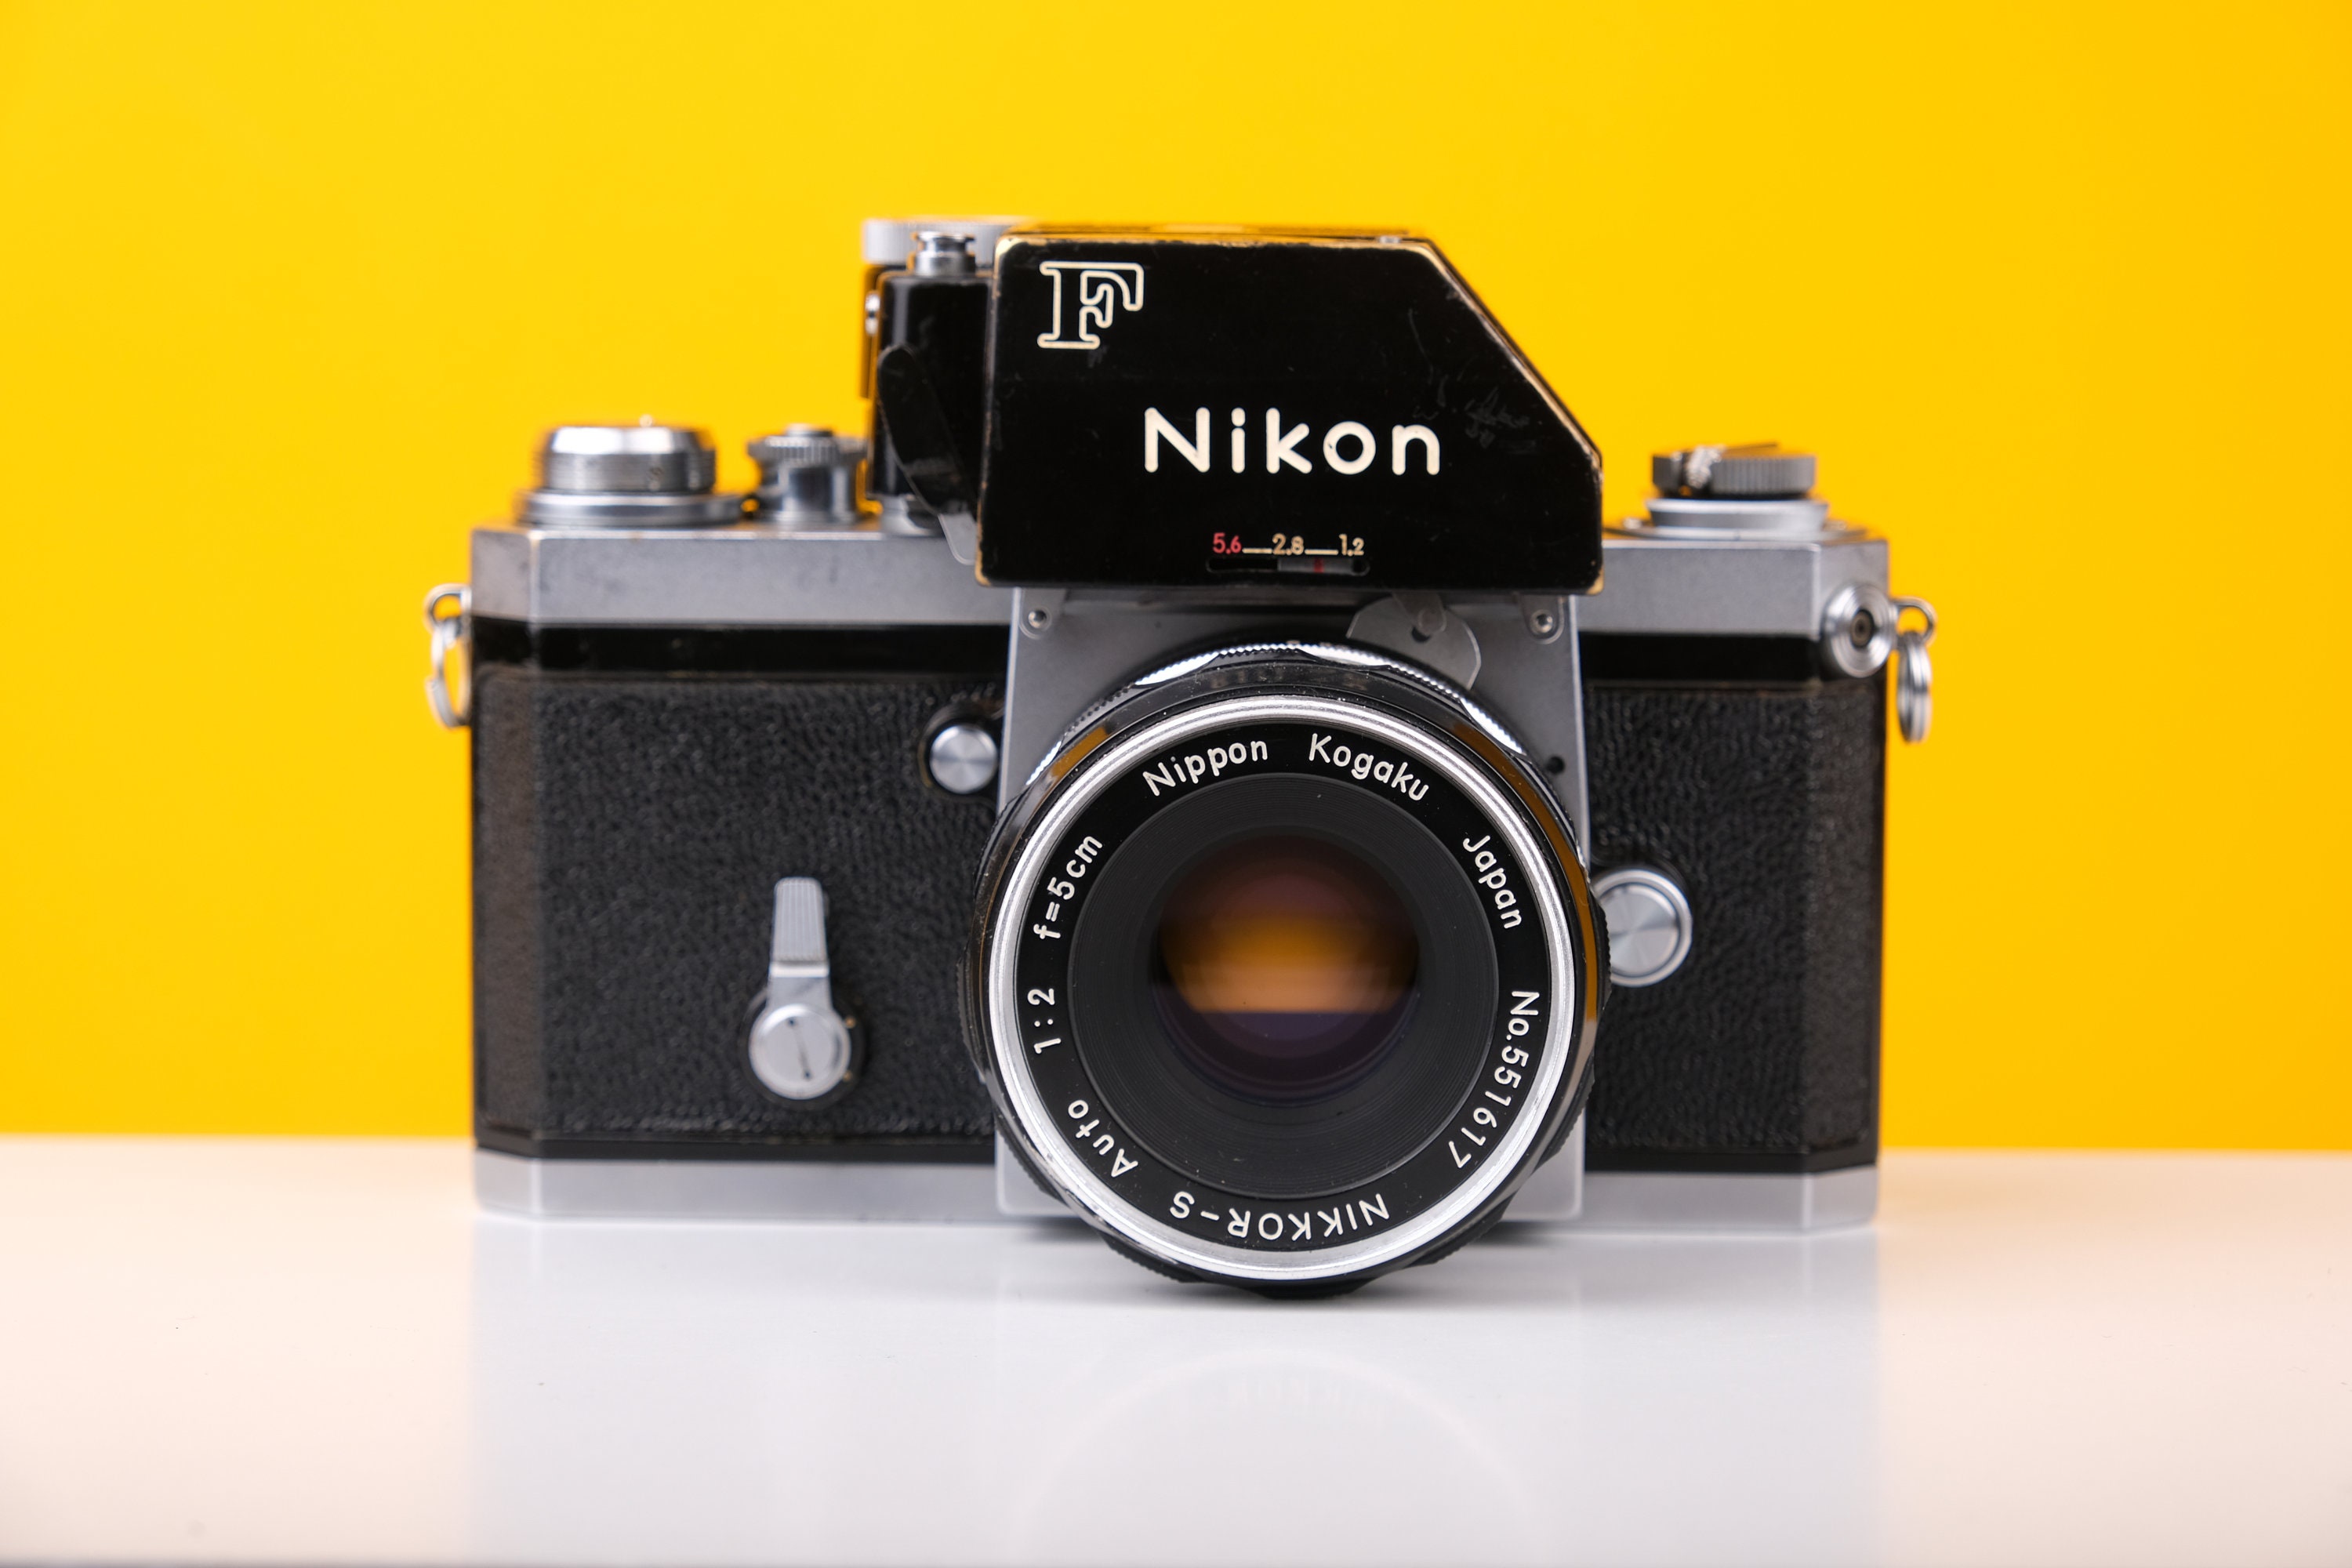 Nikon F Photomic 35mm Film Camera With Nikkor 50mm F/2 Lens pic